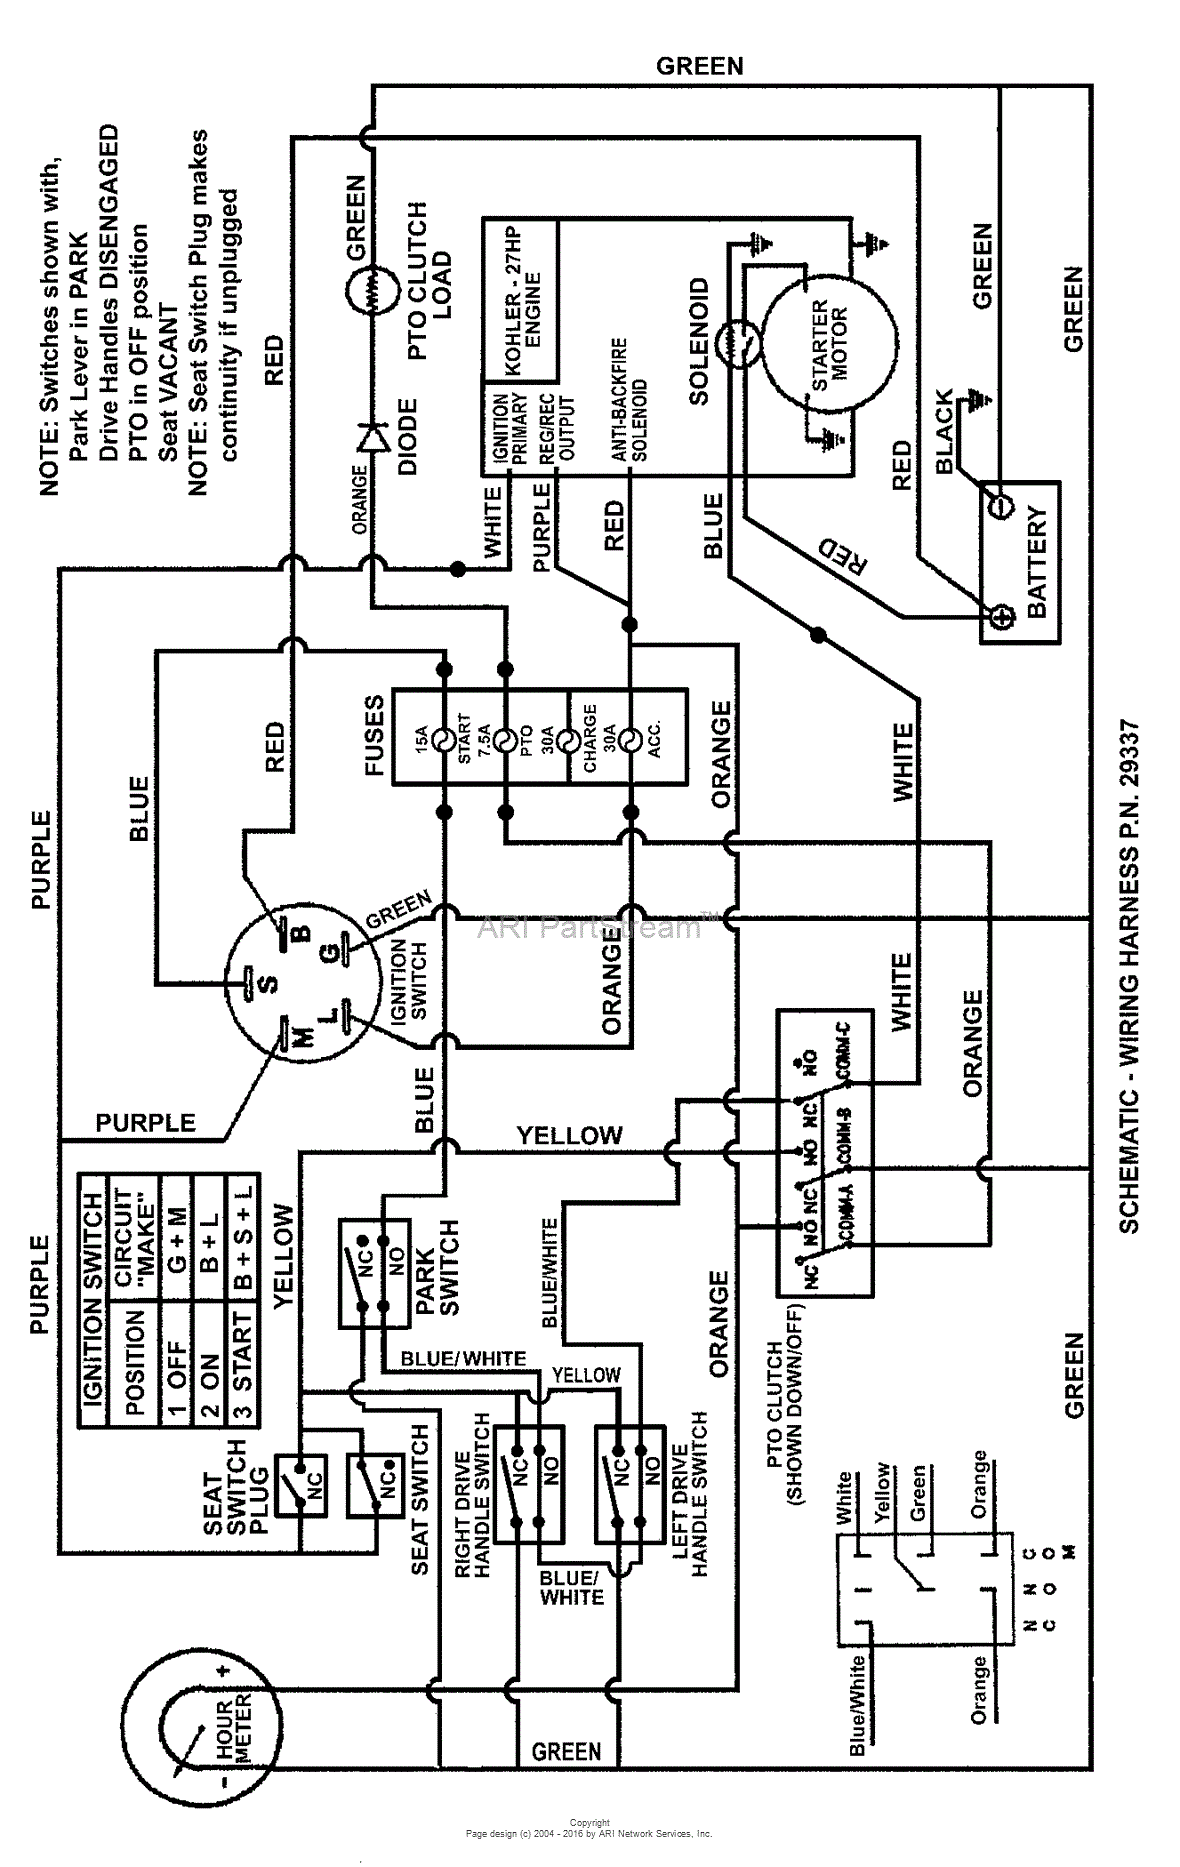 wiring diagram for craftsman riding mower with kohler 15.5 engine